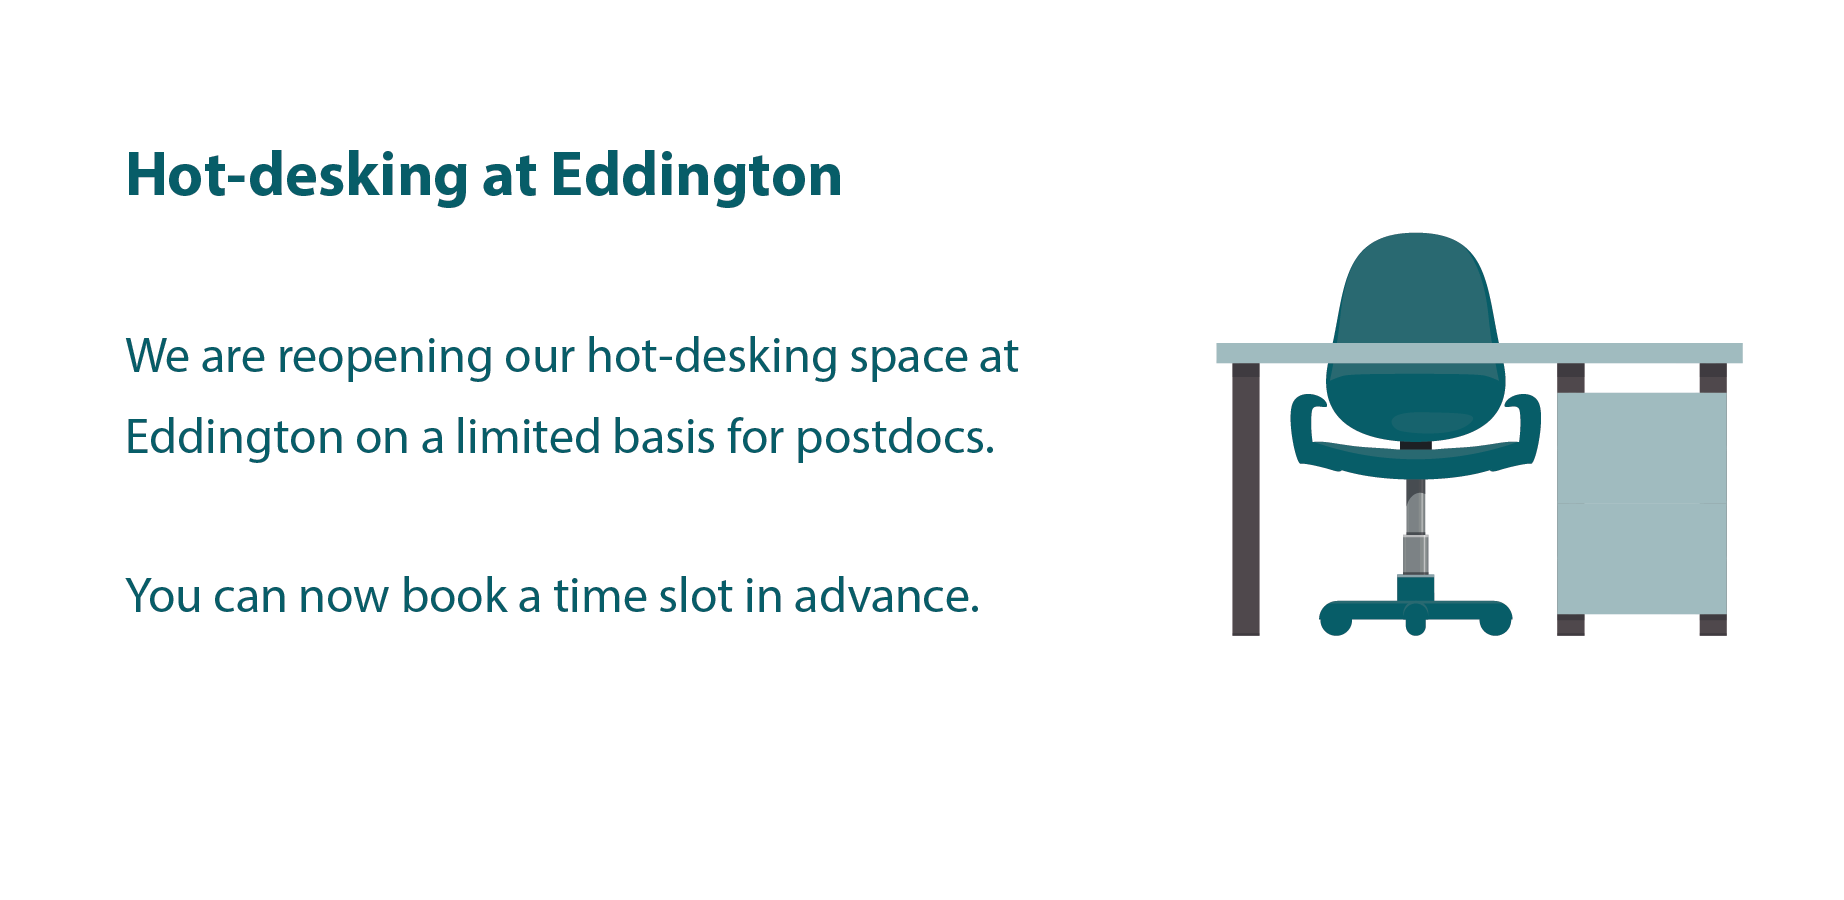 Hot-desking for postdocs now available at Eddington